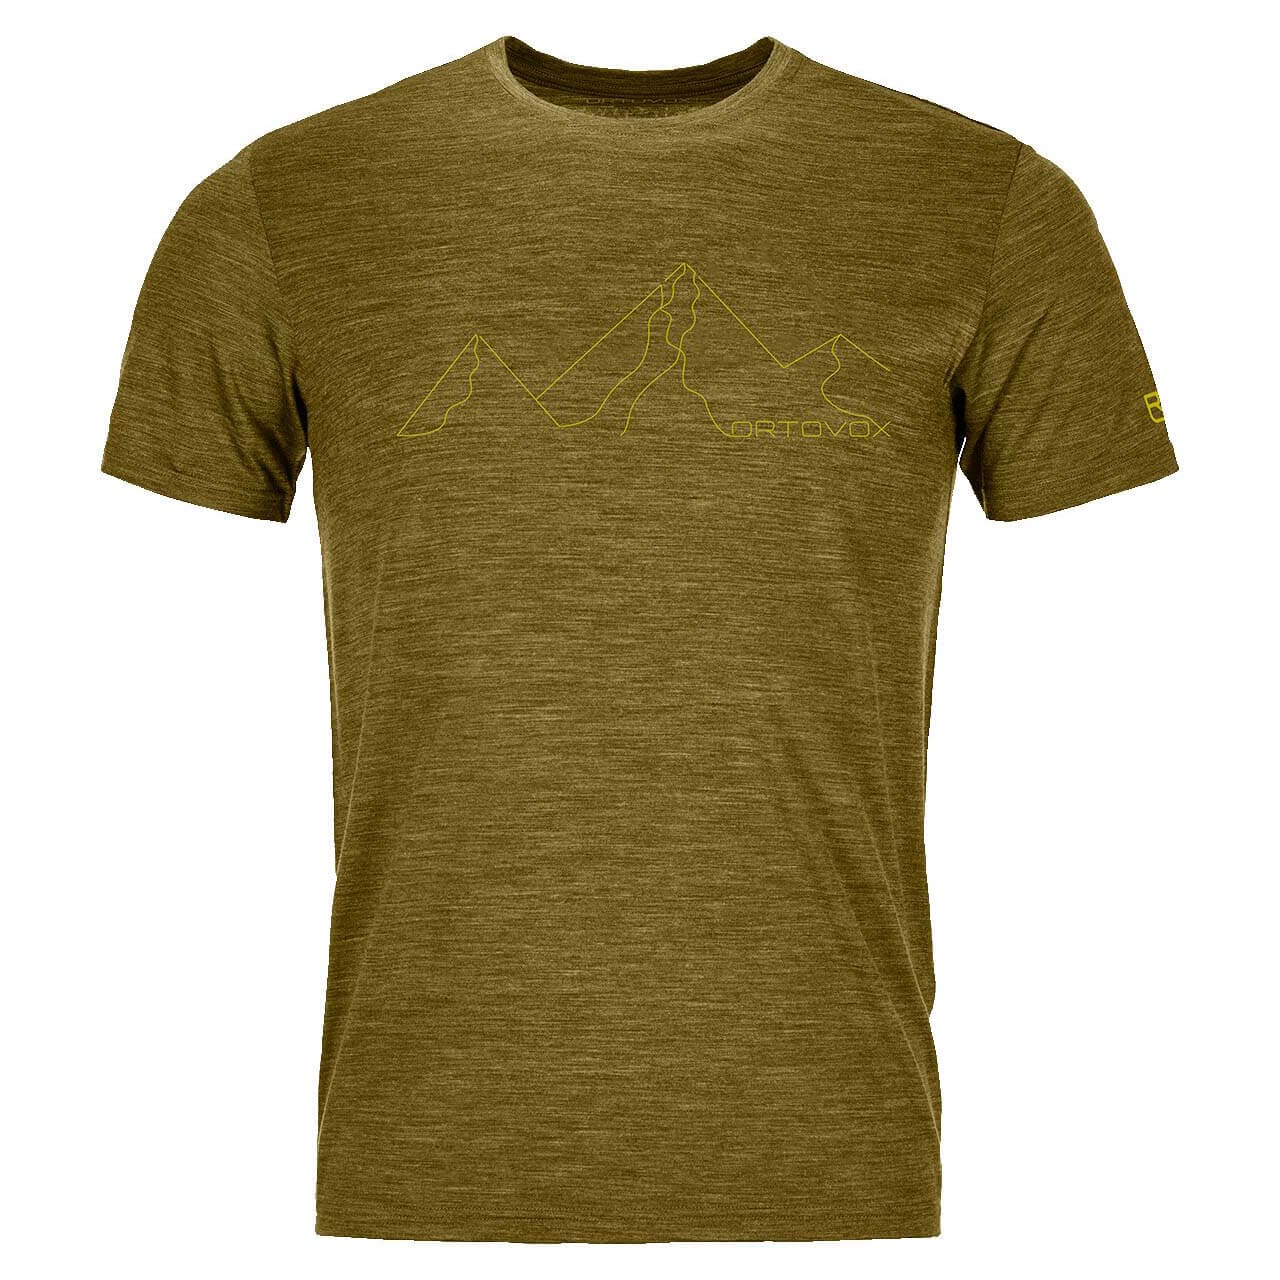 Ortovox Mountain T-Shirt 150 Cool - Green Moss Blend, M